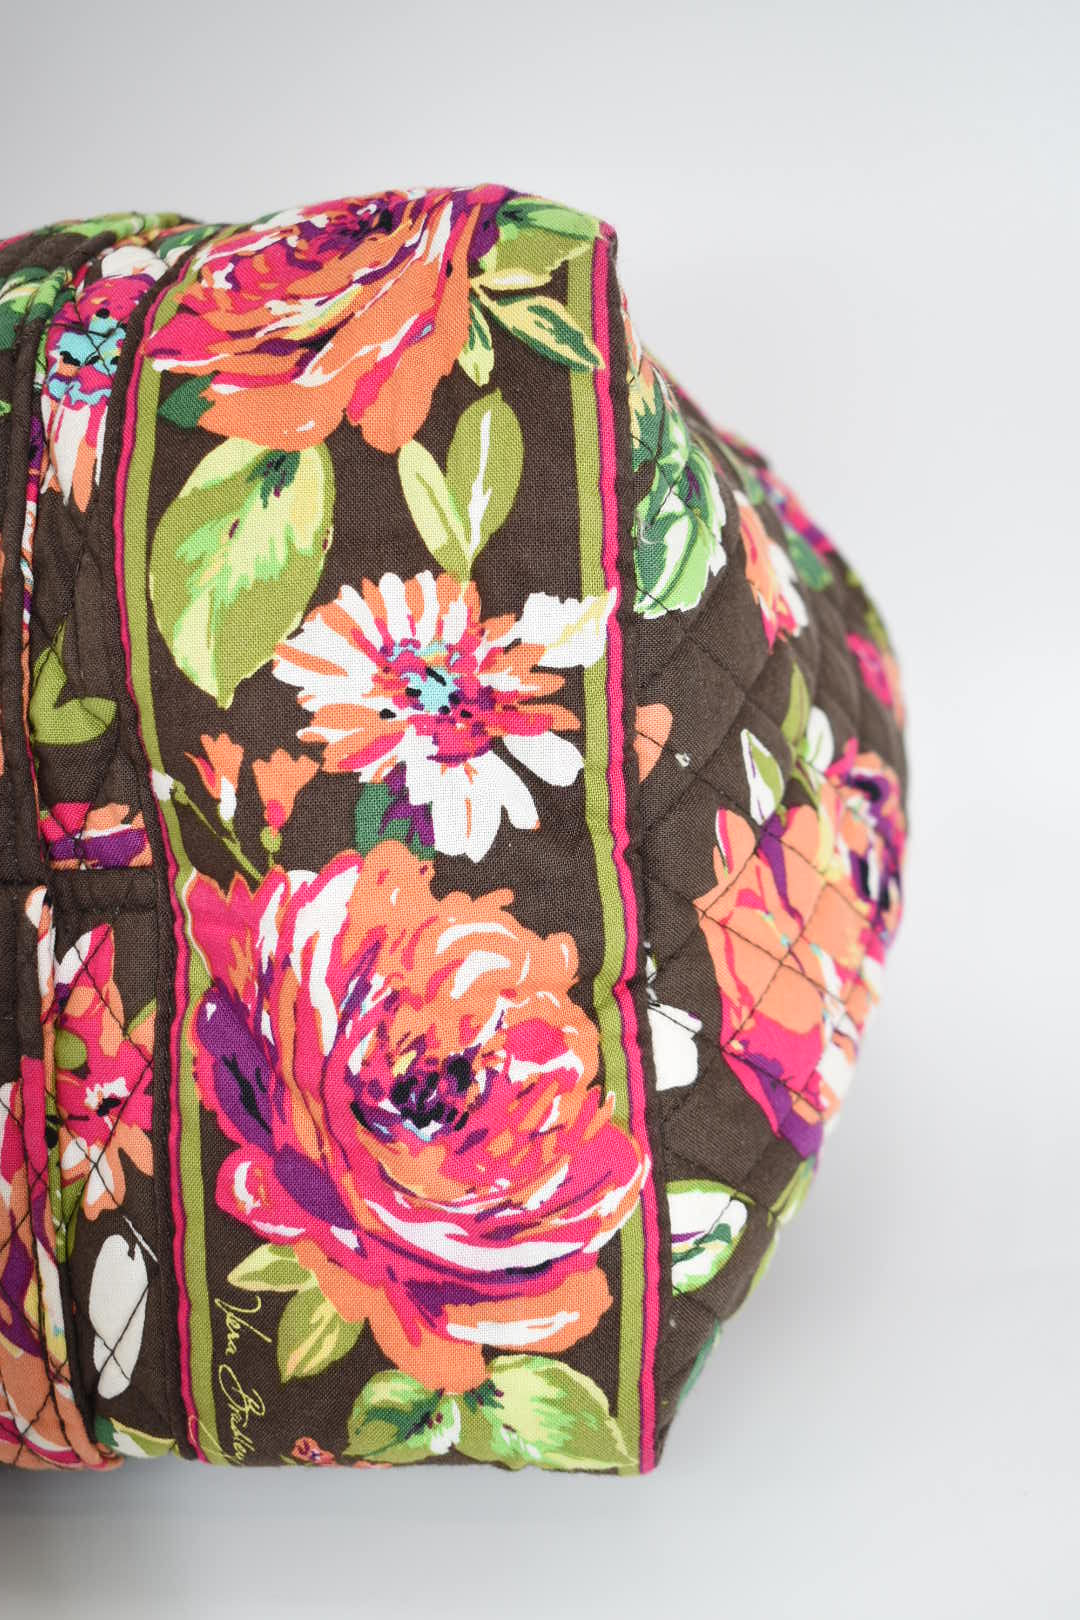 Vera Bradley Small Duffel Bag in "English Rose" Pattern